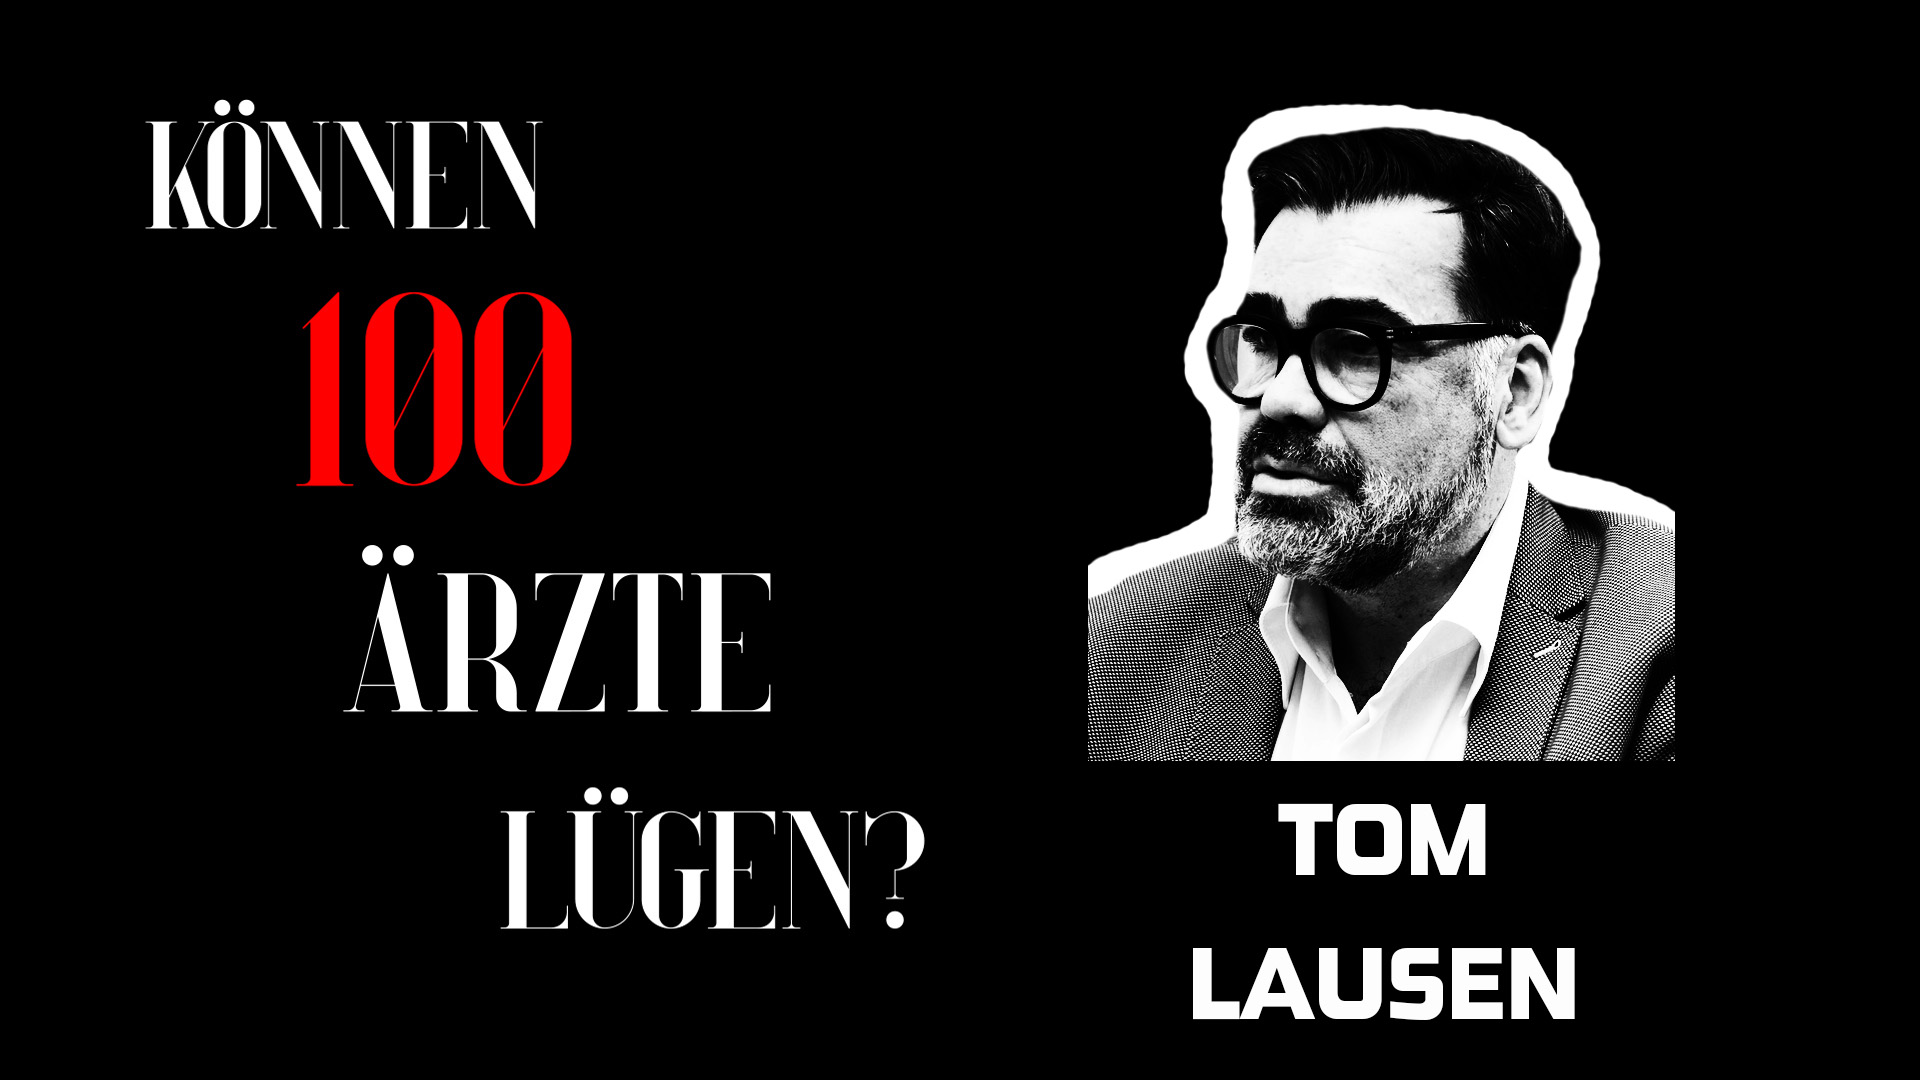 Tom Lausen